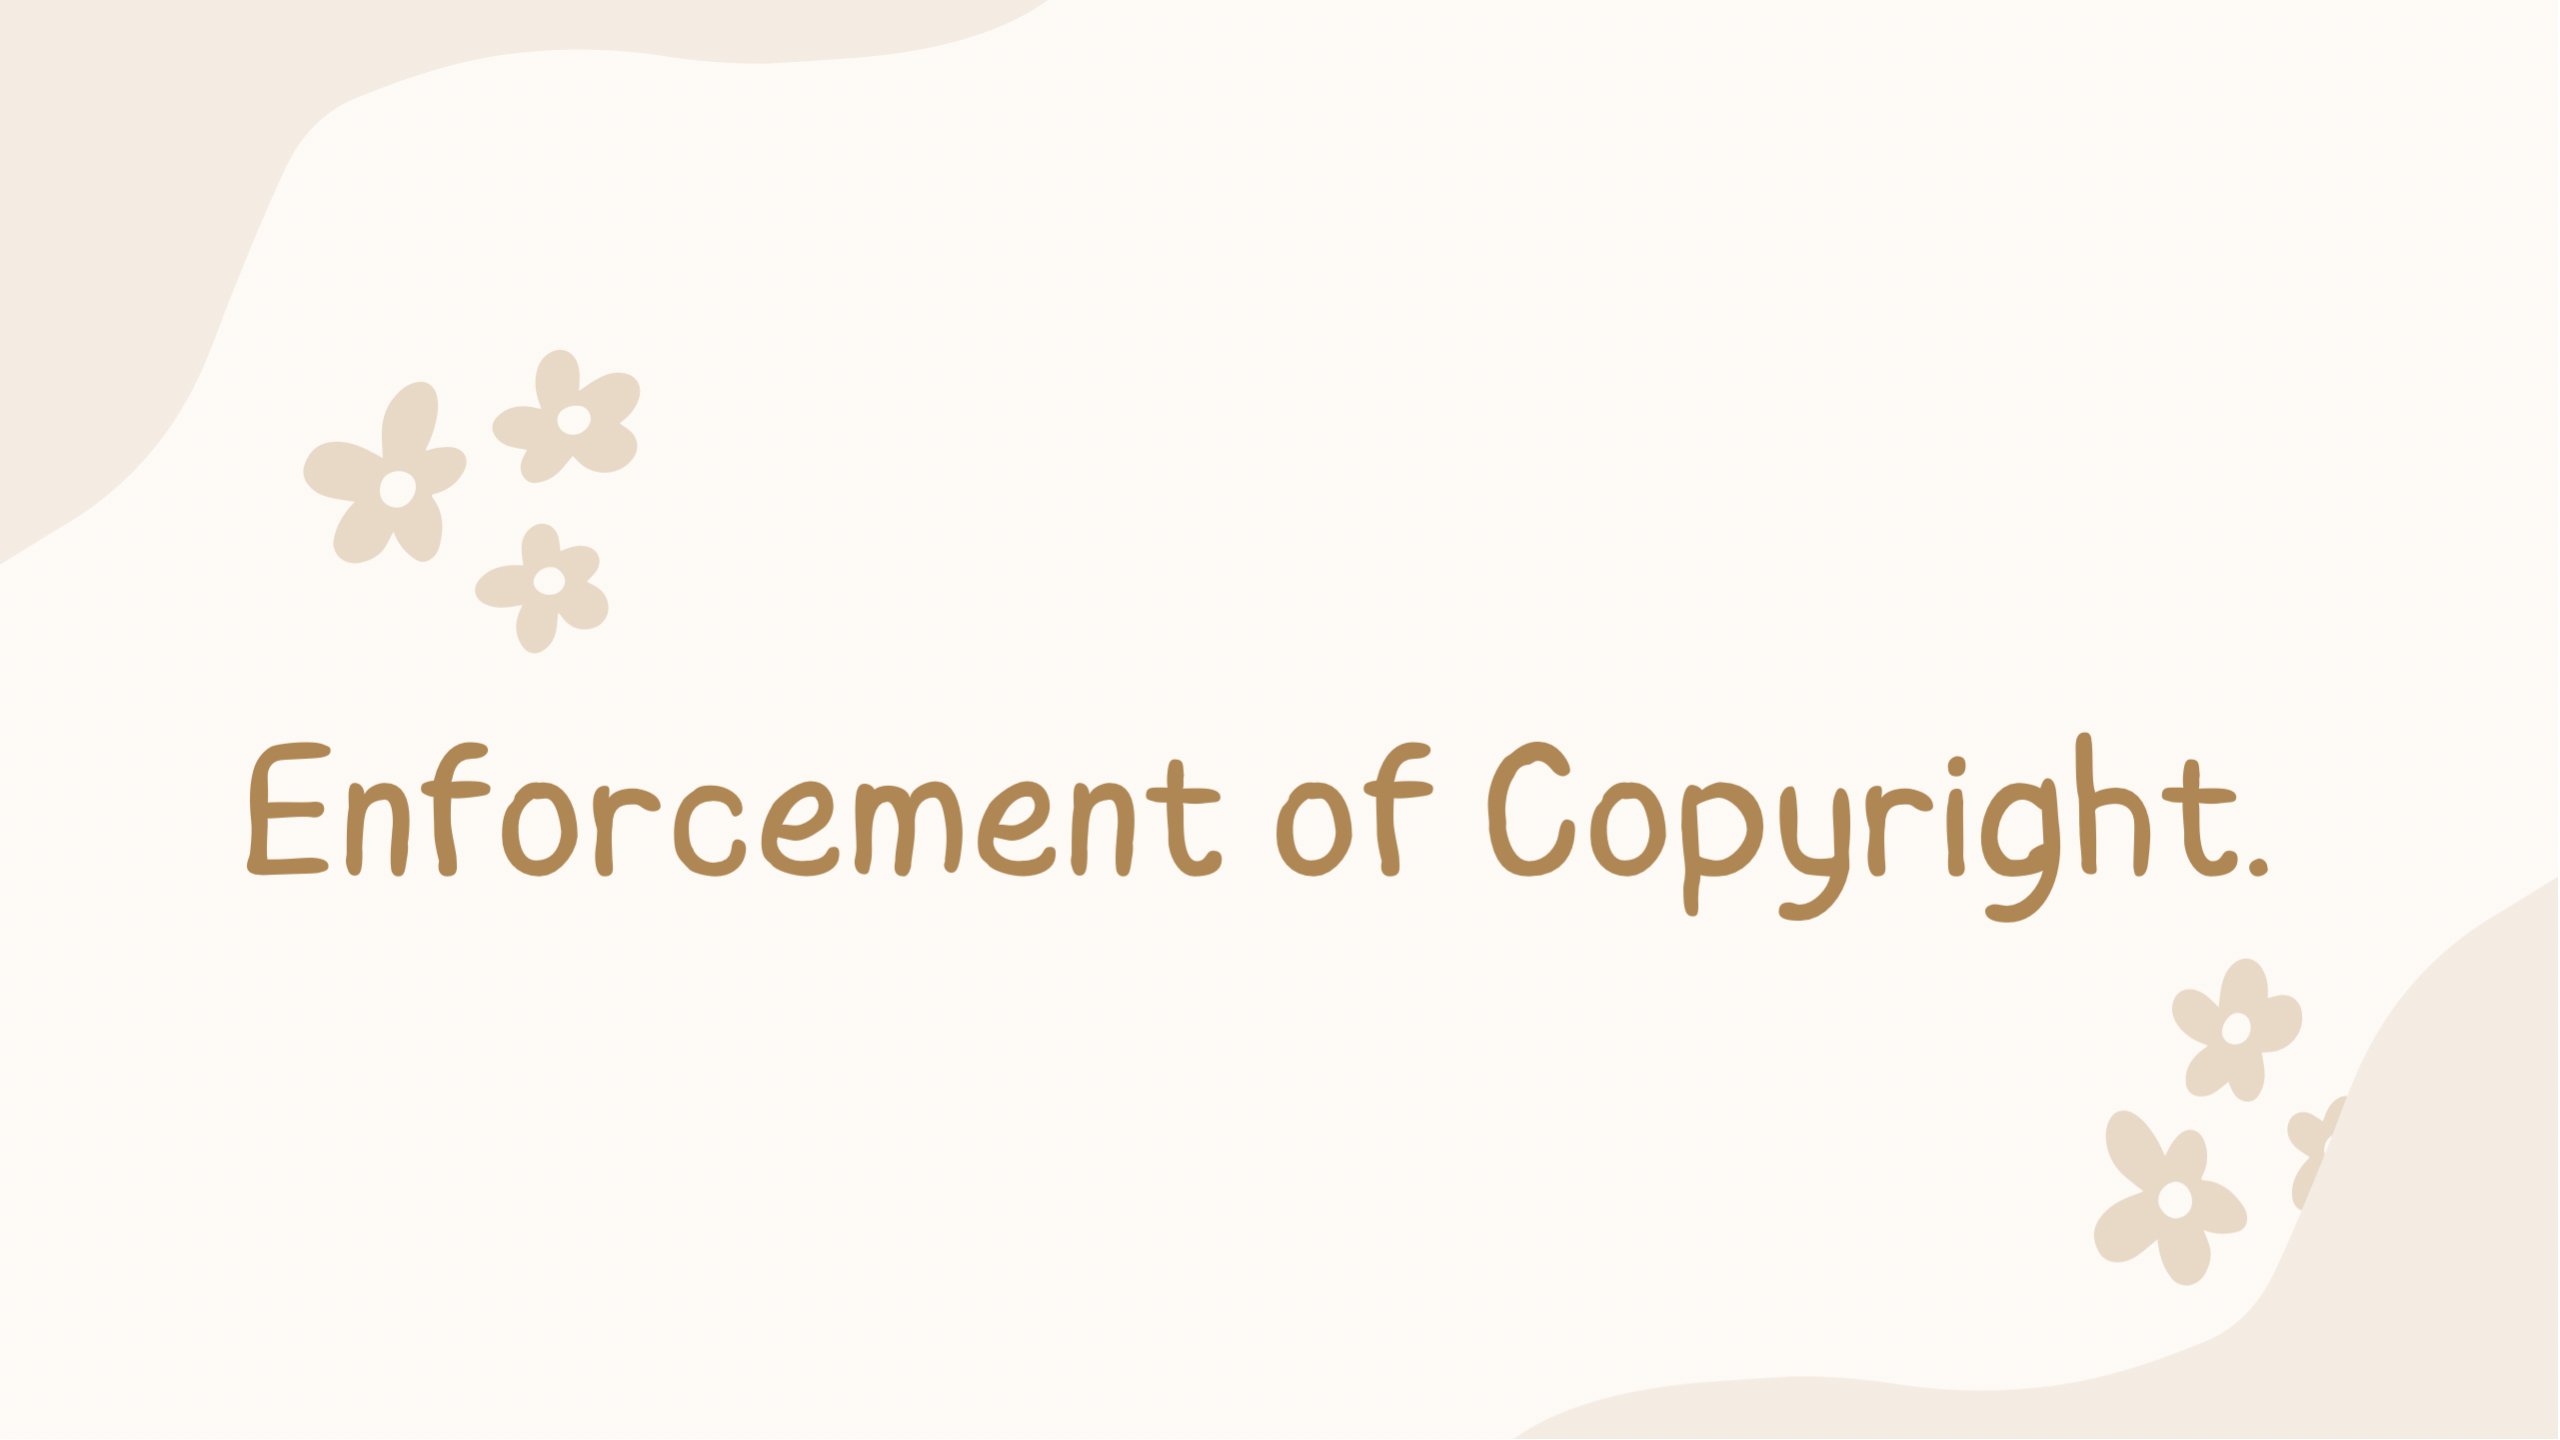  Enforcement of Copyright.